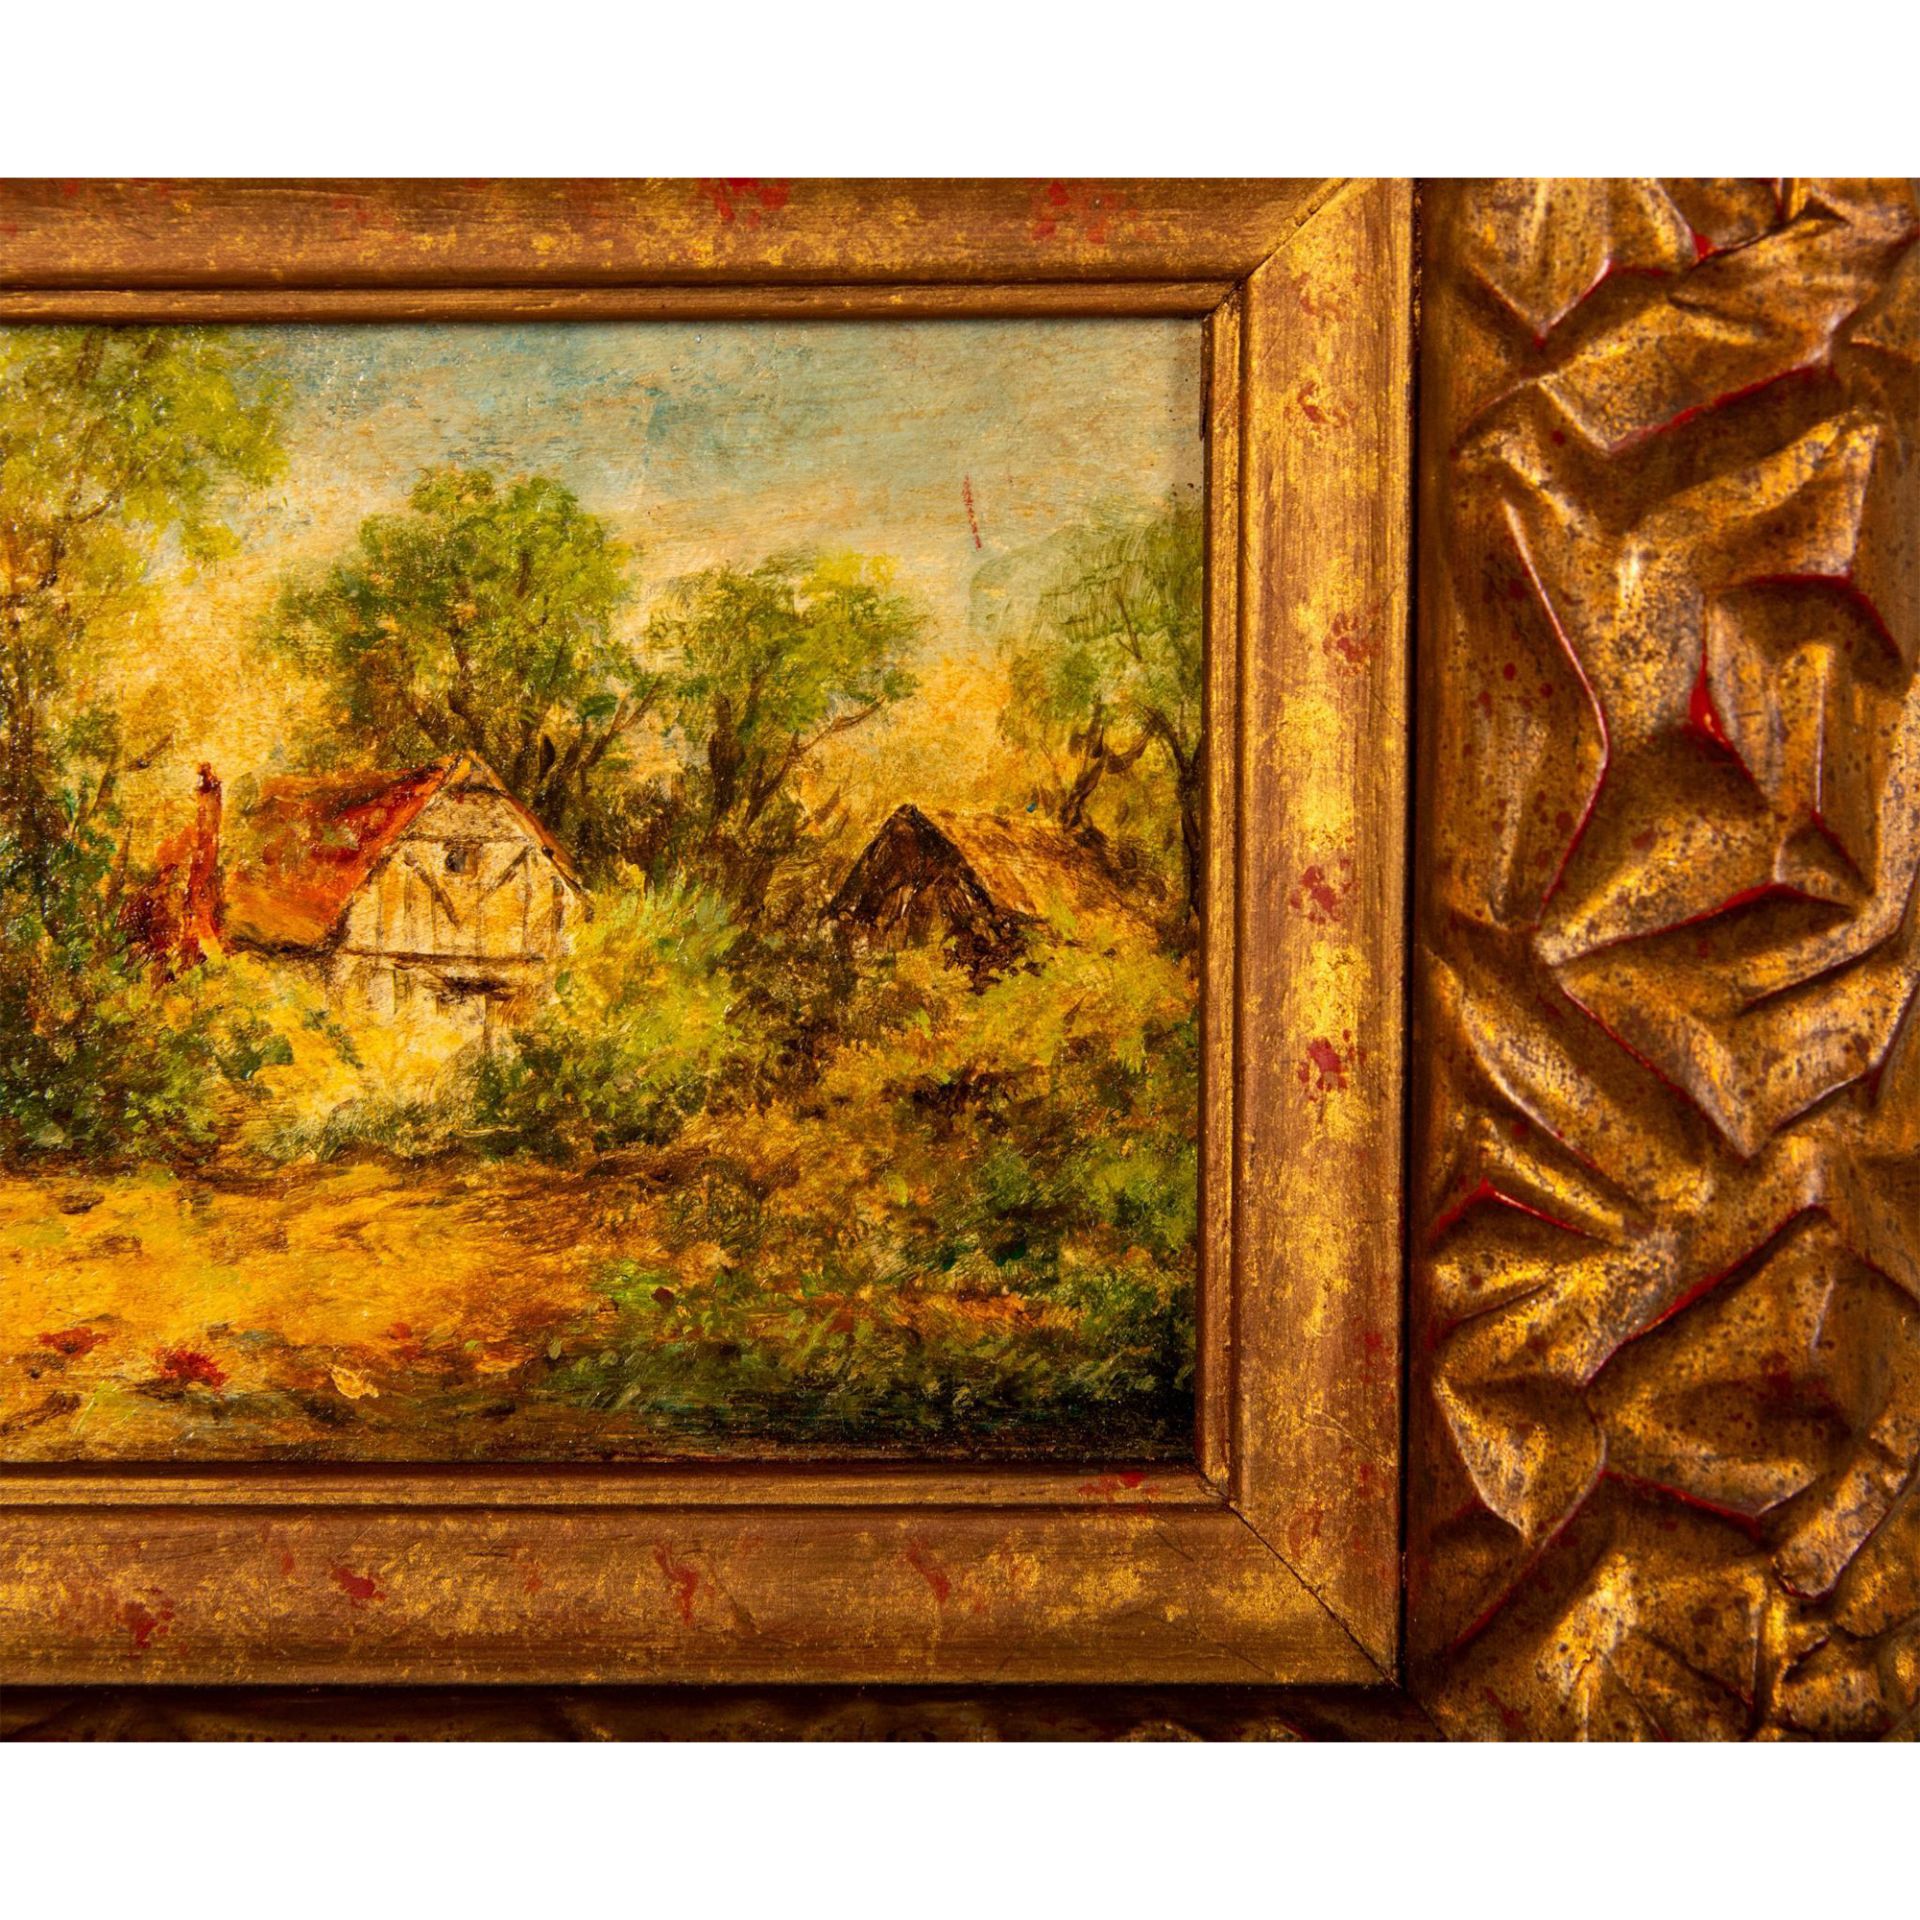 Original Oil on Canvas Miniature Painting, Rural Landscape - Image 4 of 6